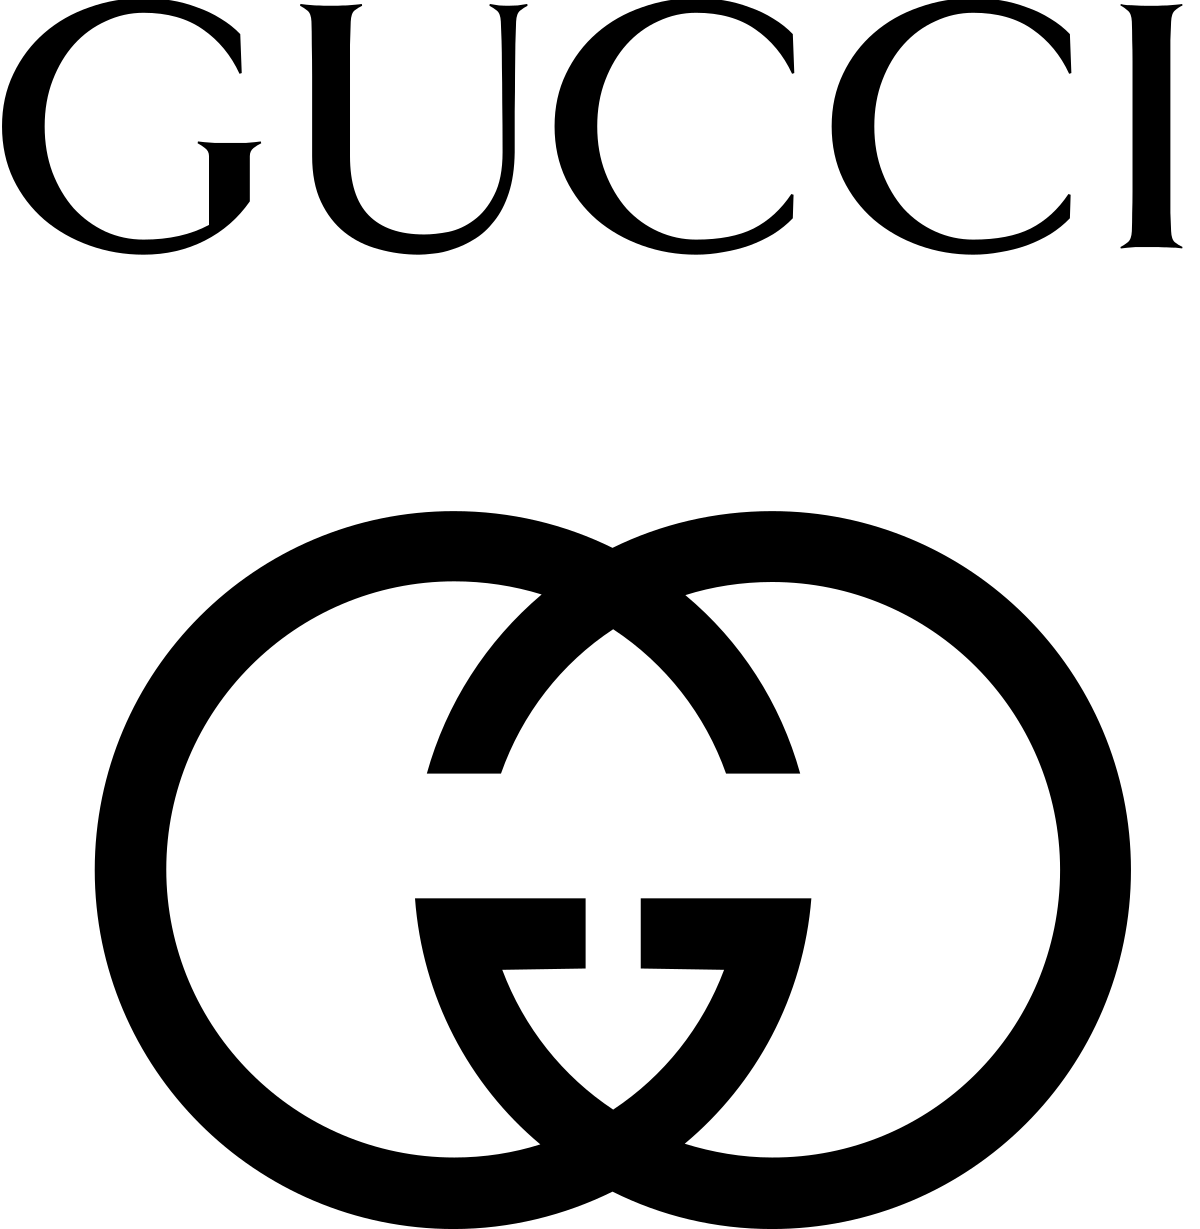 Gucci logo PNG imagen transparente